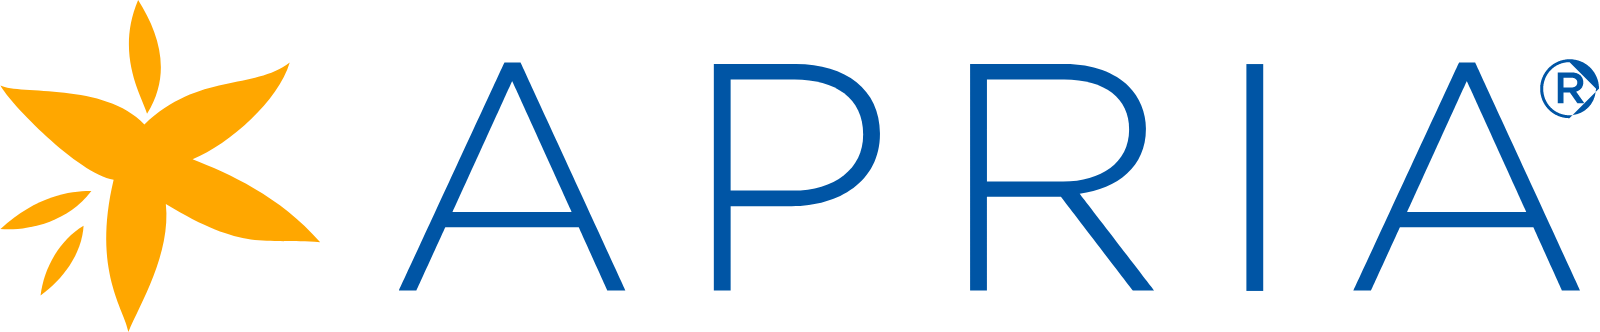 Apria logo large (transparent PNG)